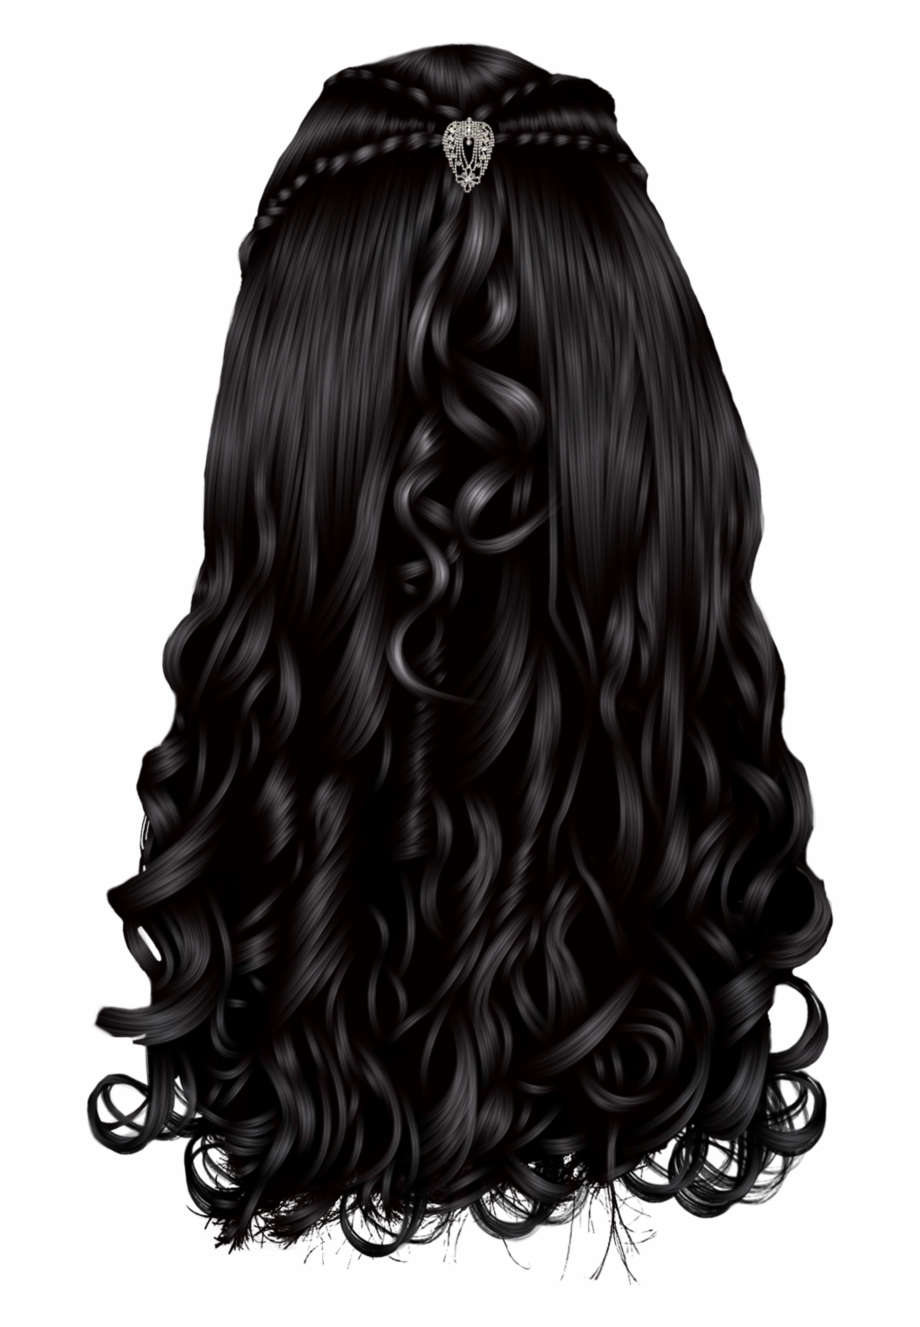 Free Black Hair Transparent Background Download Free Clip Art